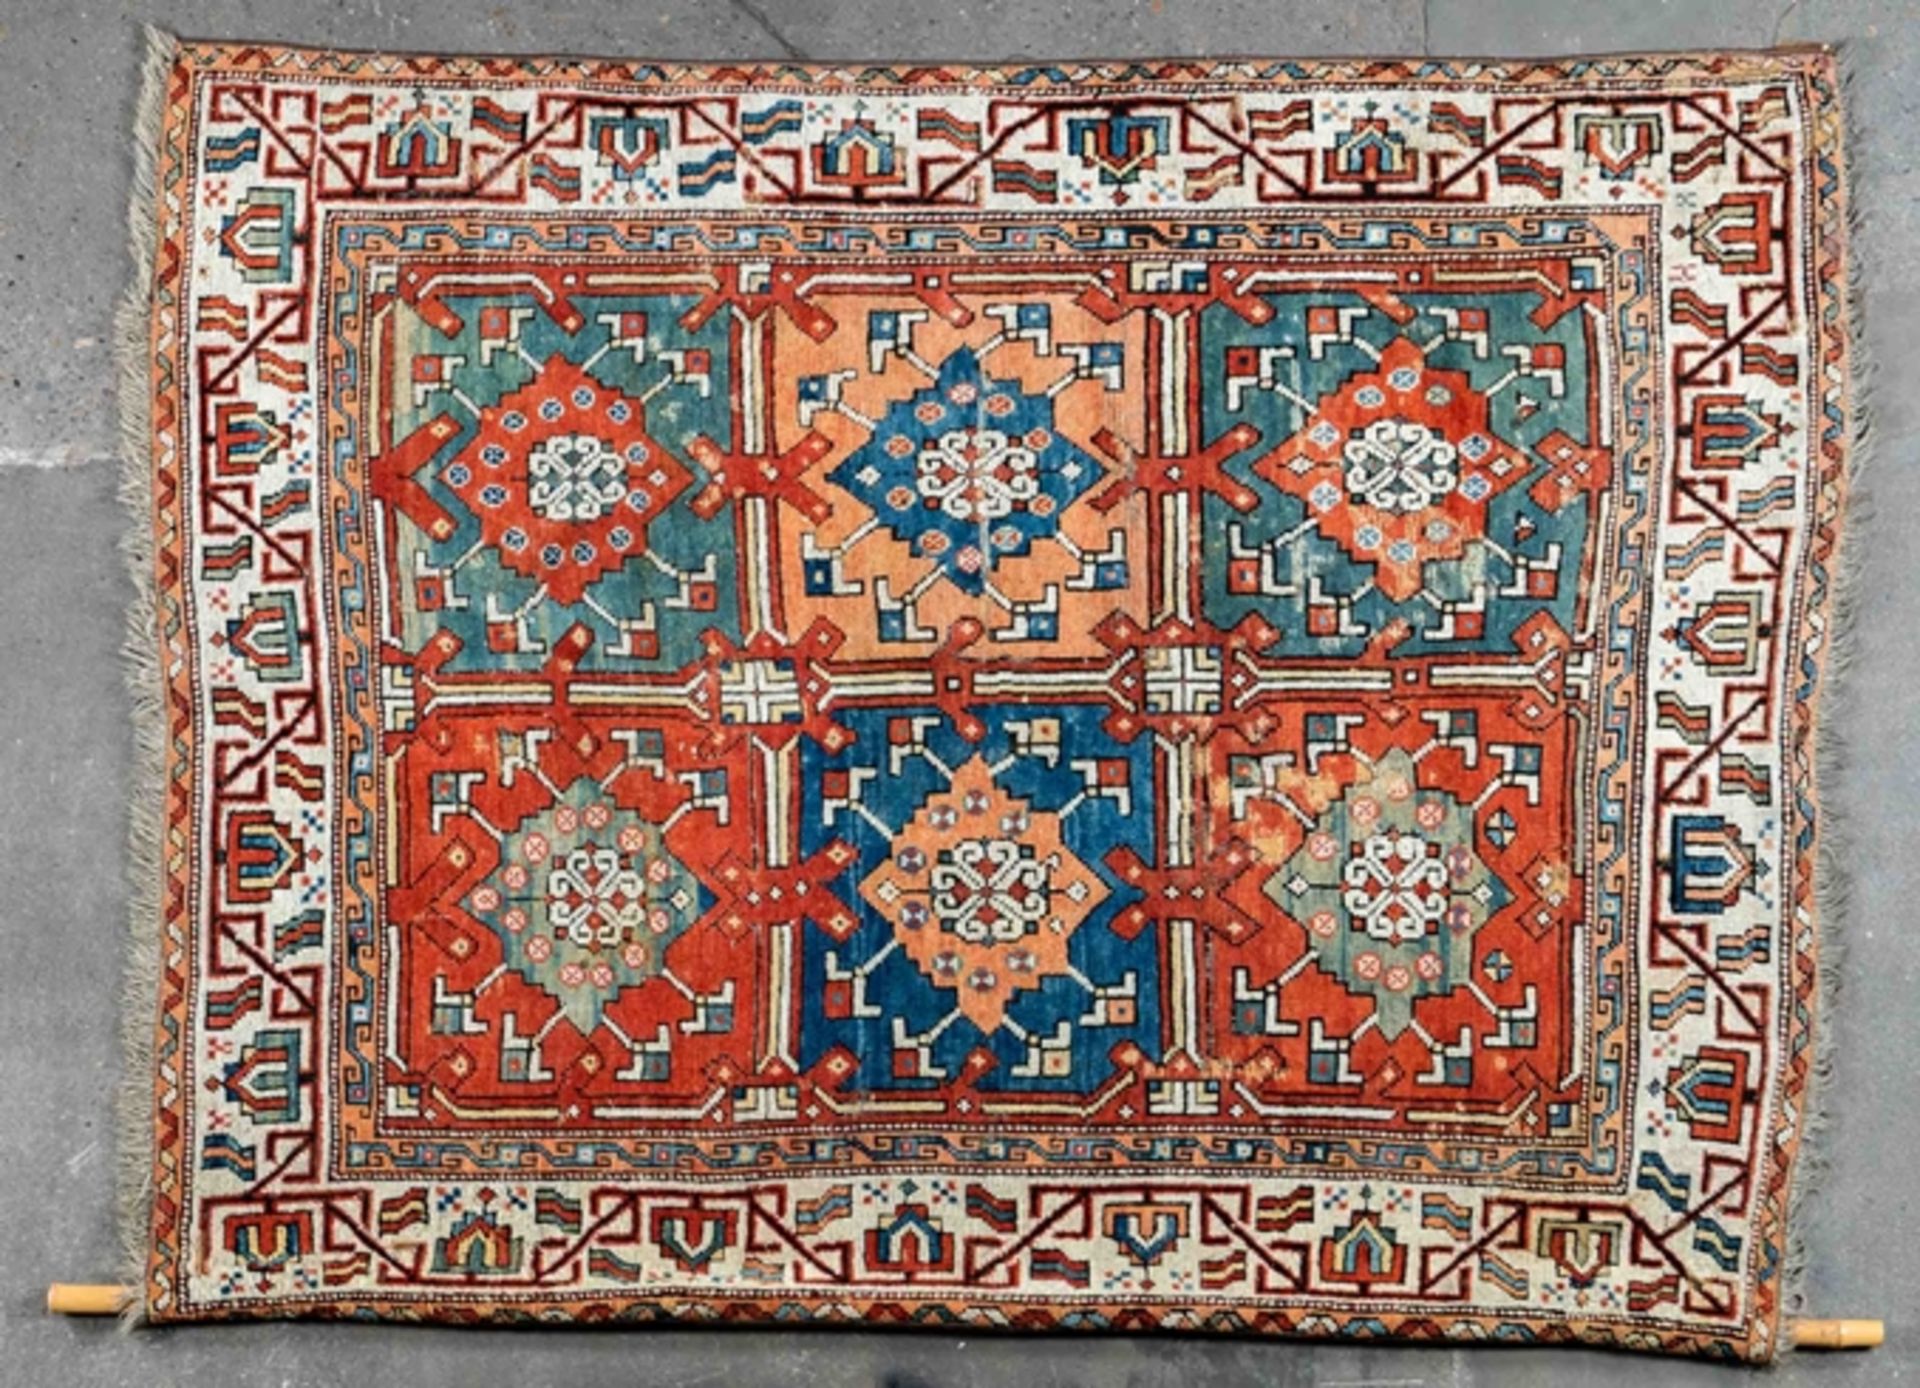 Älterer oder antiker kaukasischer Teppich, sogenannter Gartenteppich, Fond mit 6 "Gärten", hing jah